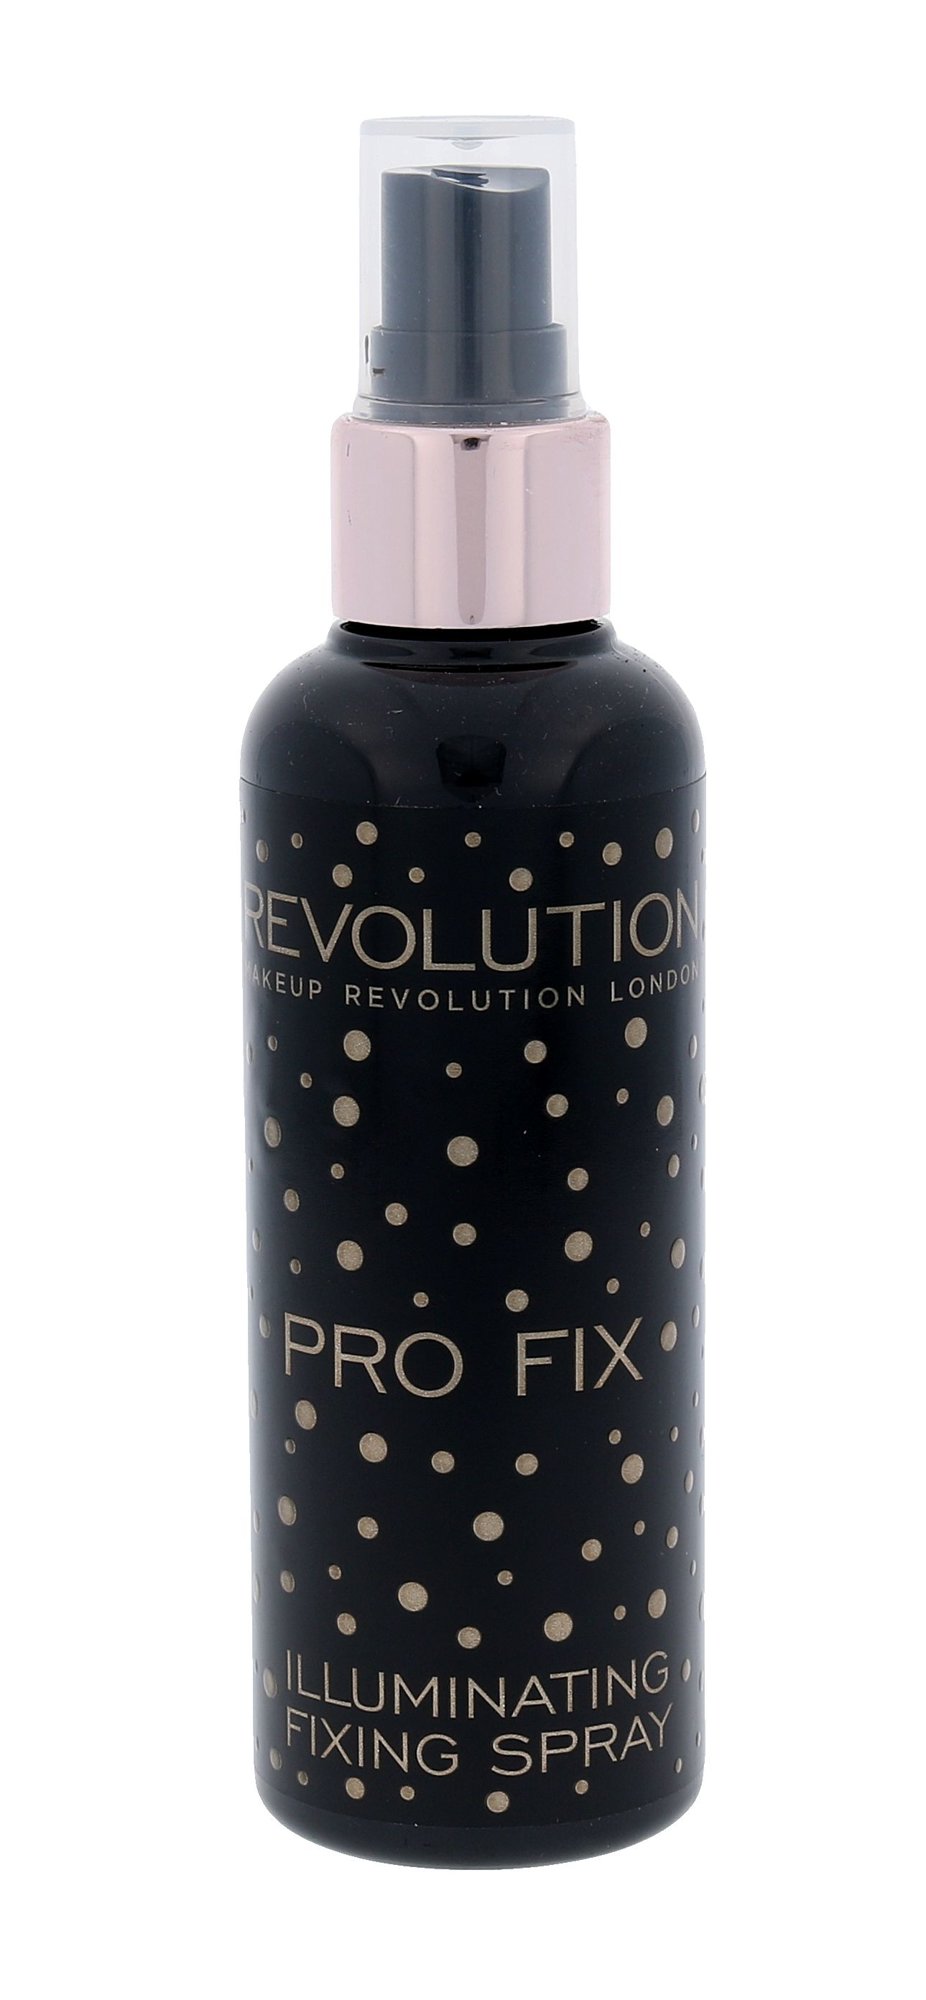 Makeup Revolution London Pro Fix Illuminating Fixing Spray